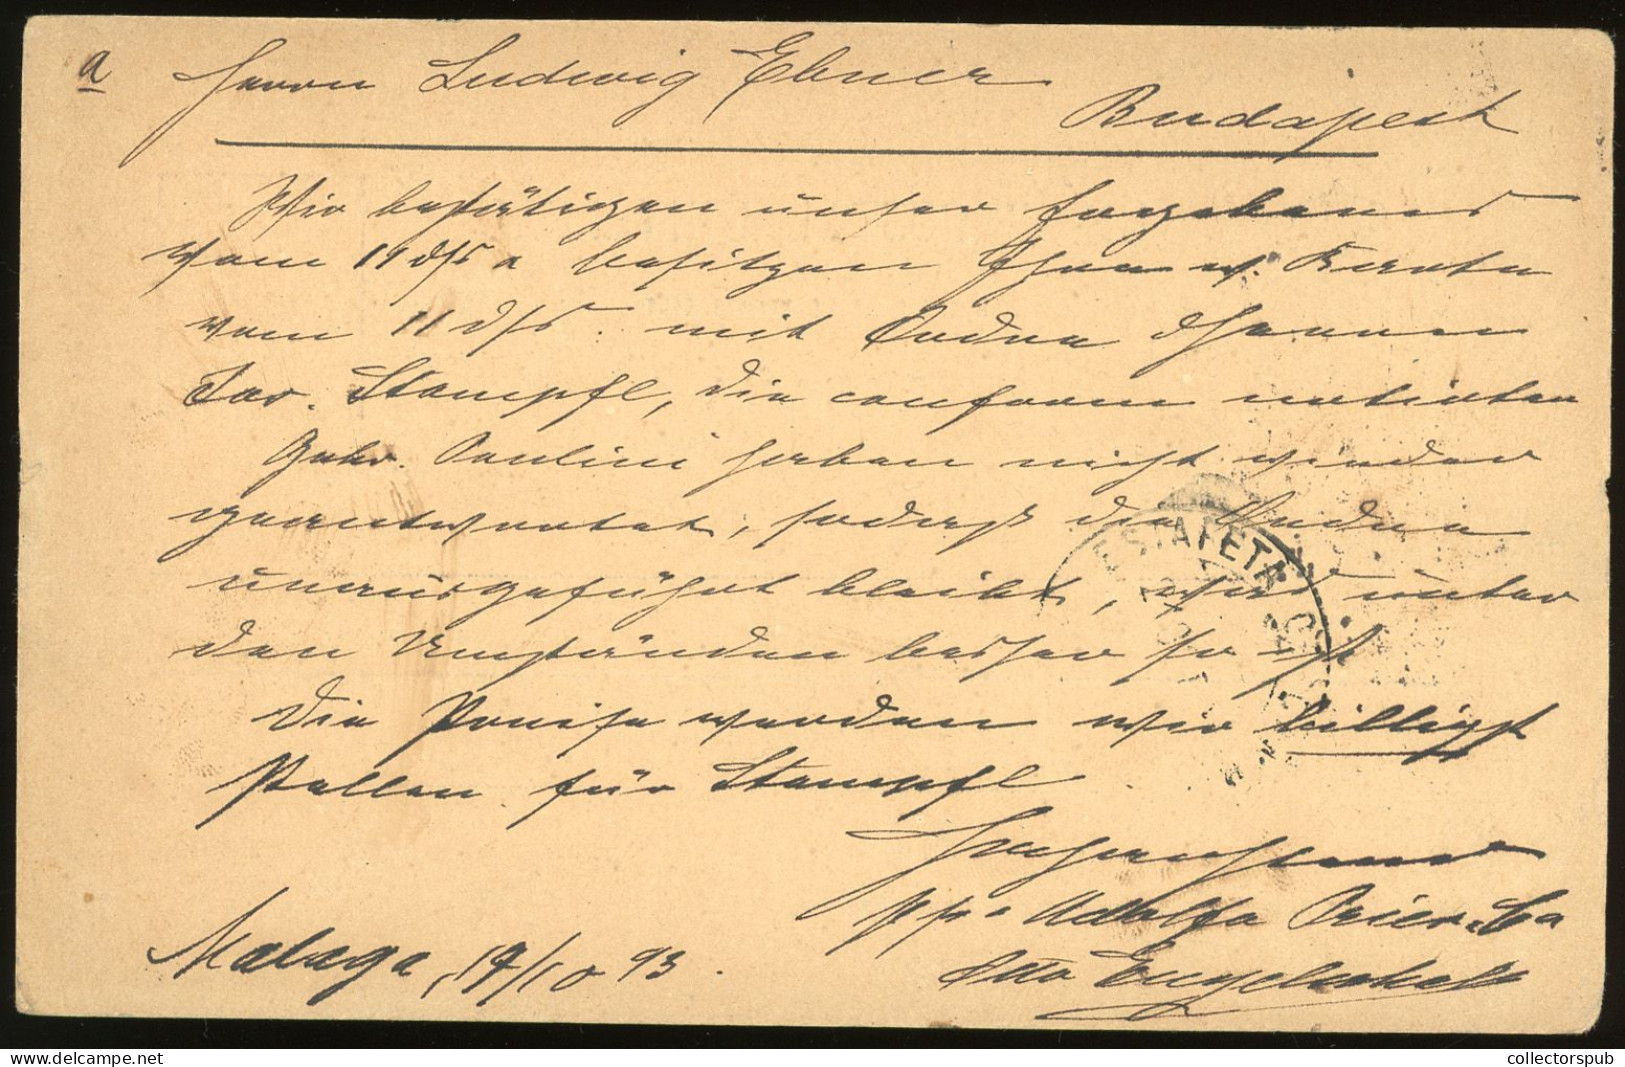 MALAGA  1893. PS Card To Hungary - 1850-1931